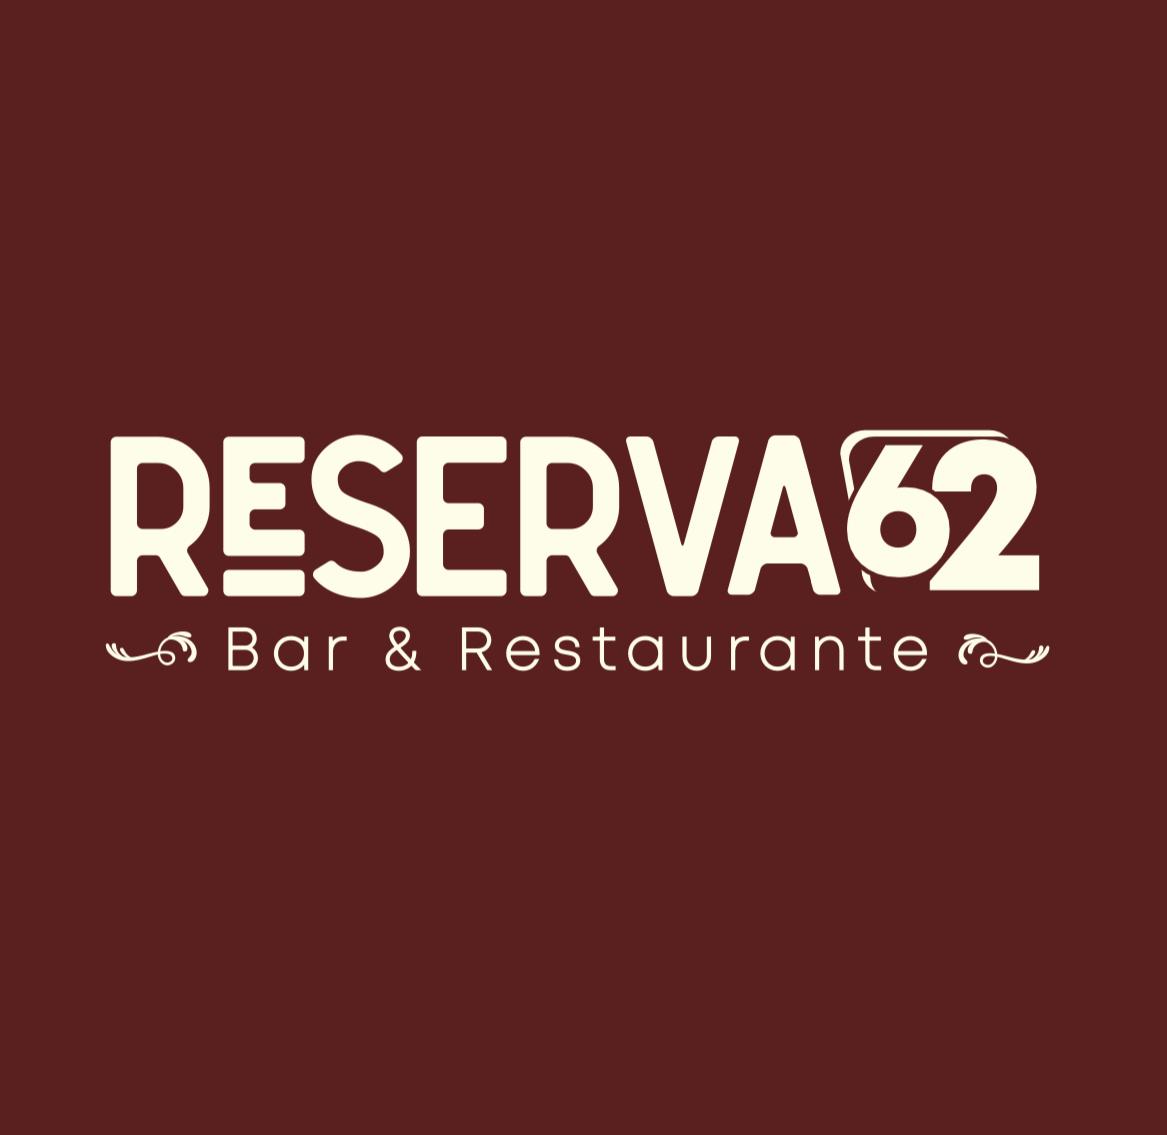 Reserva 62 - Bar & Restaurante